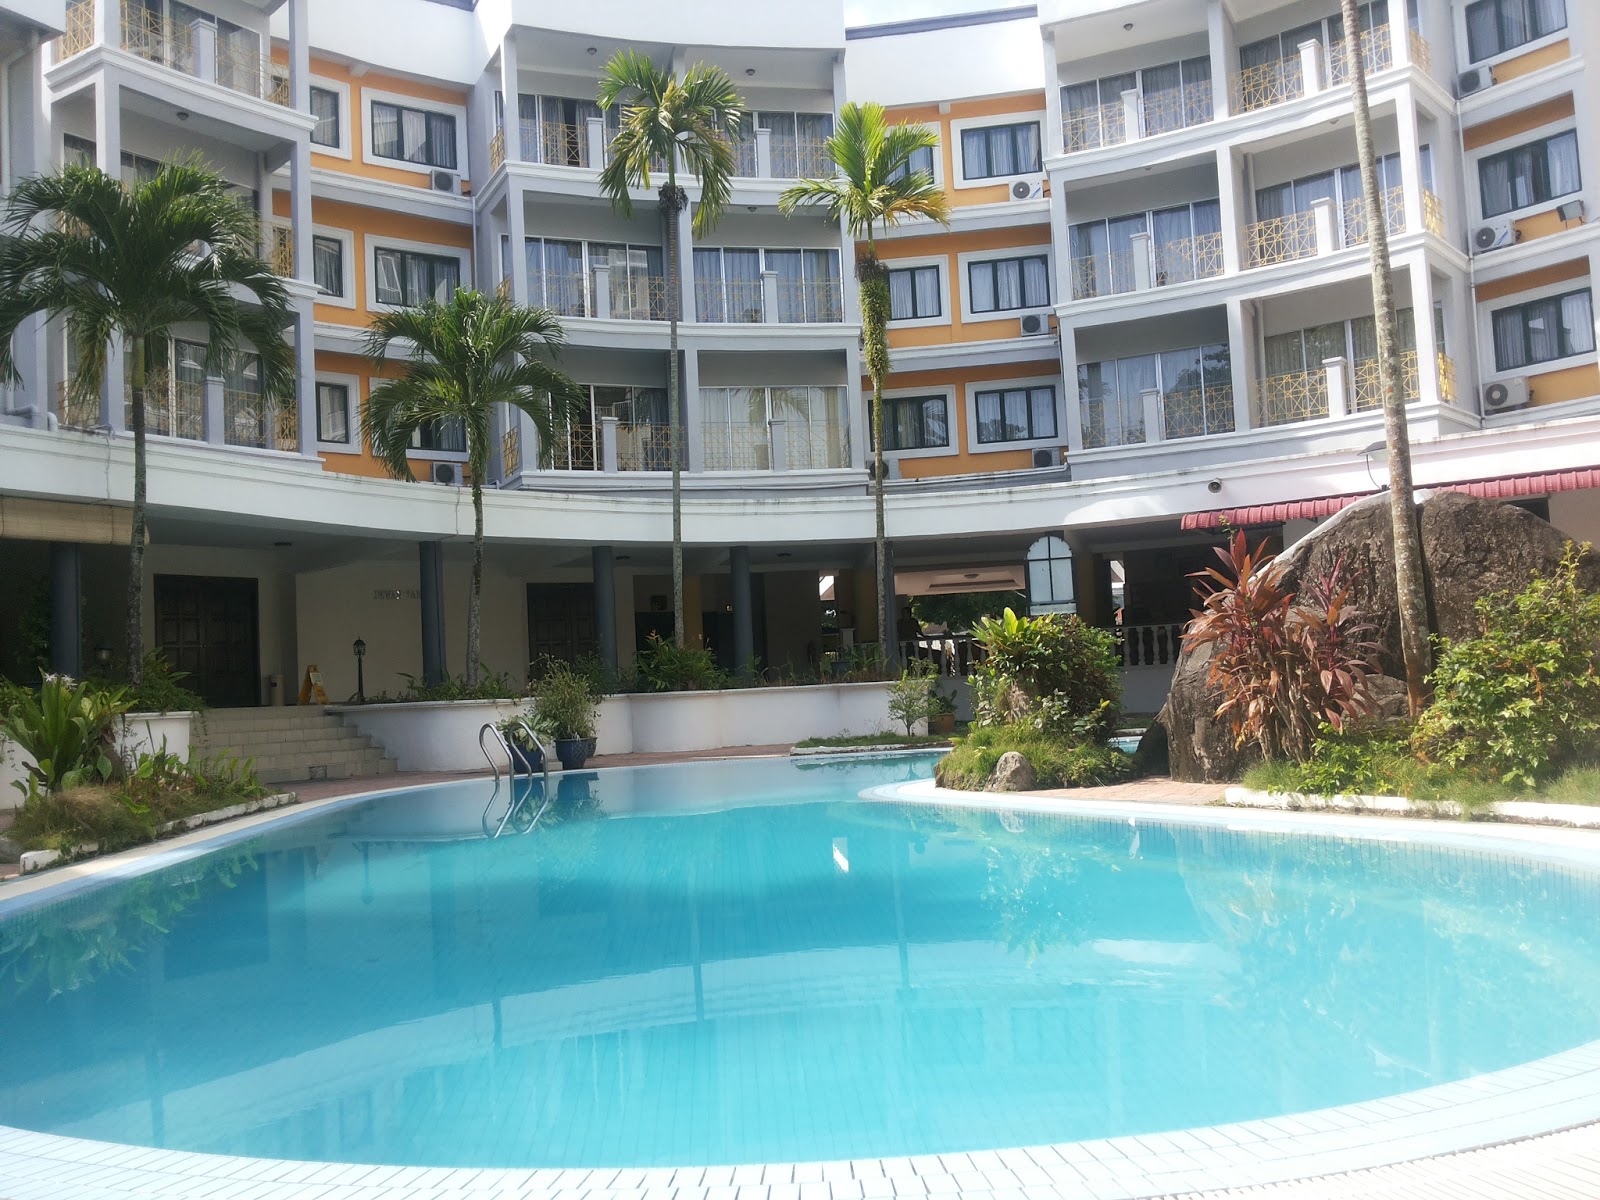 HAVE NO FEAR WHEN I'M ALONE TM Resort Tanjung Bungah, Pulau Pinang